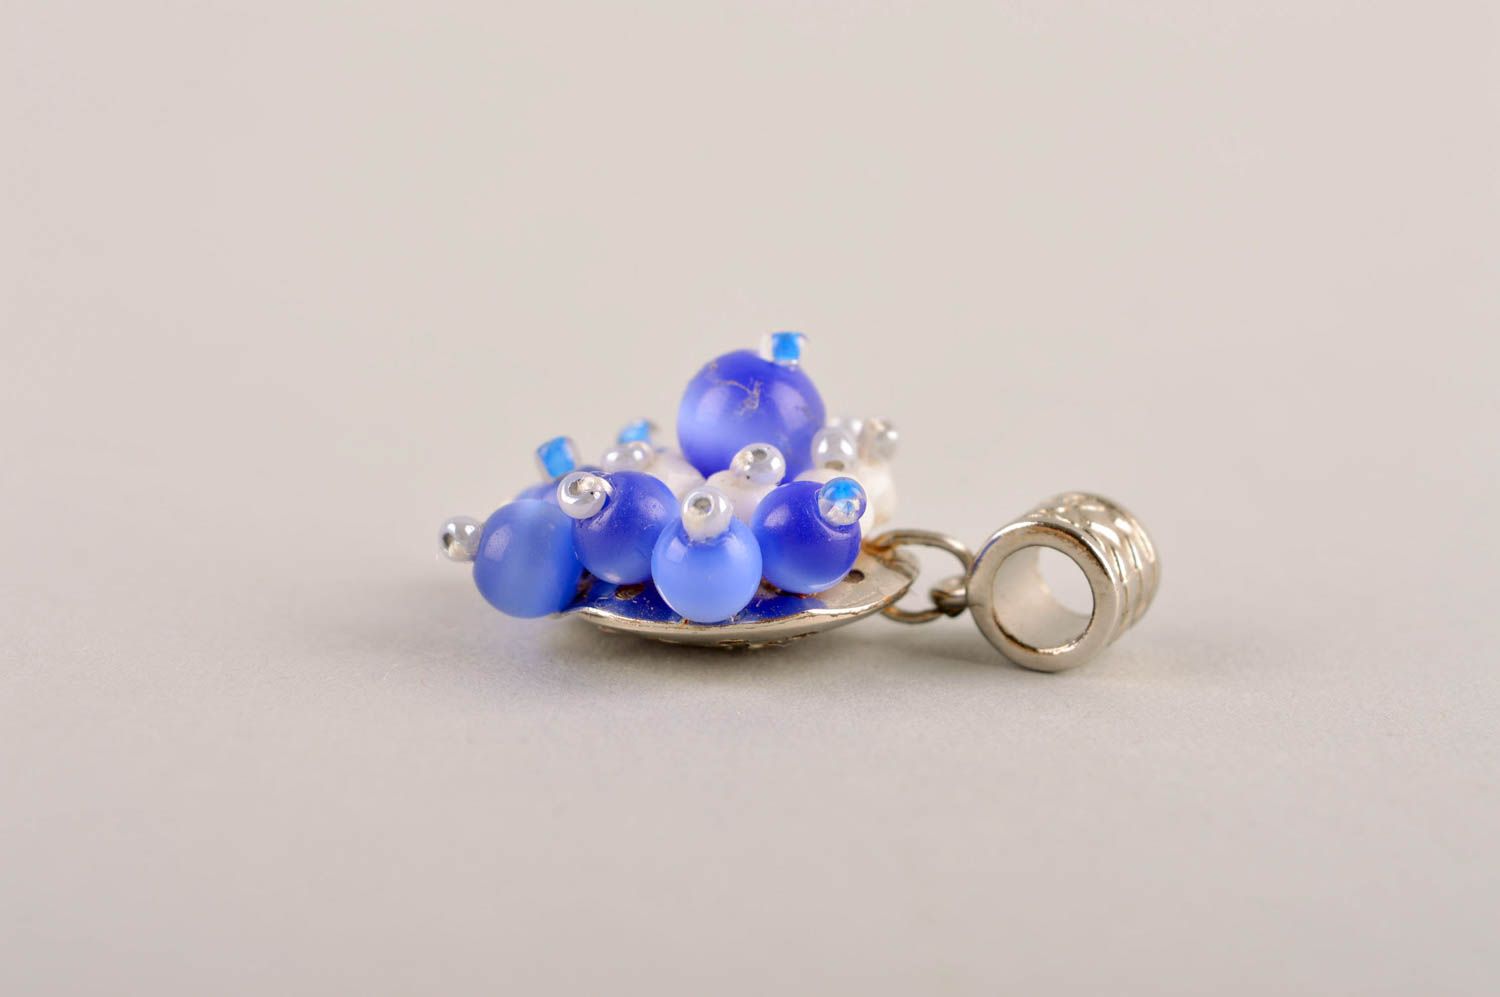 Handmade jewelry beaded jewelry pendant necklace designer accessories gift ideas photo 3